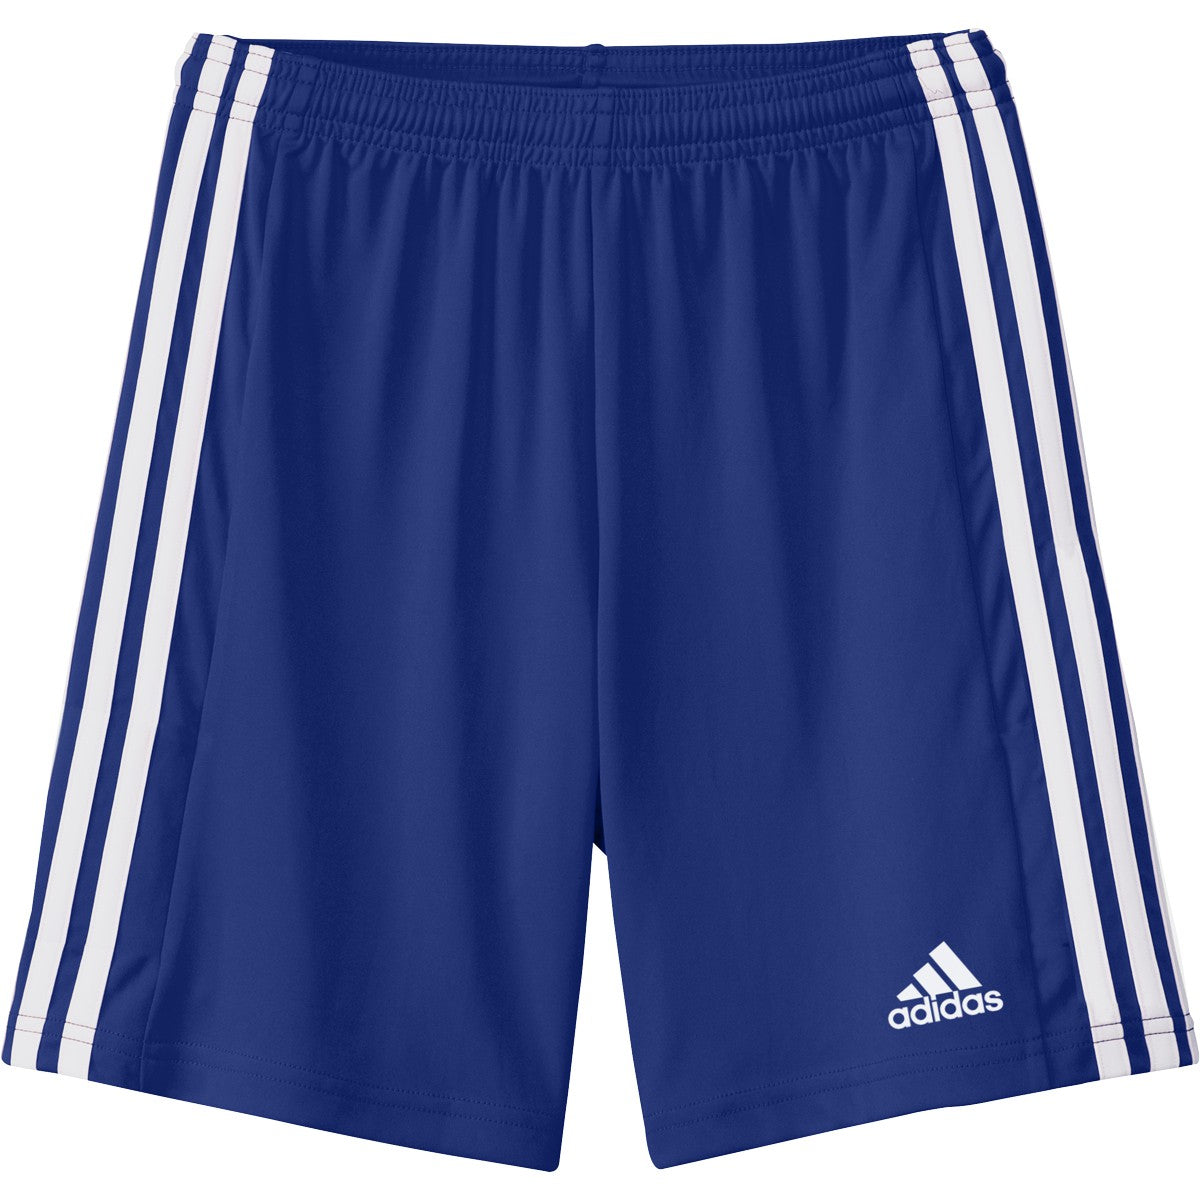 Adidas Youth Squadra 21 Shorts-Royal/White